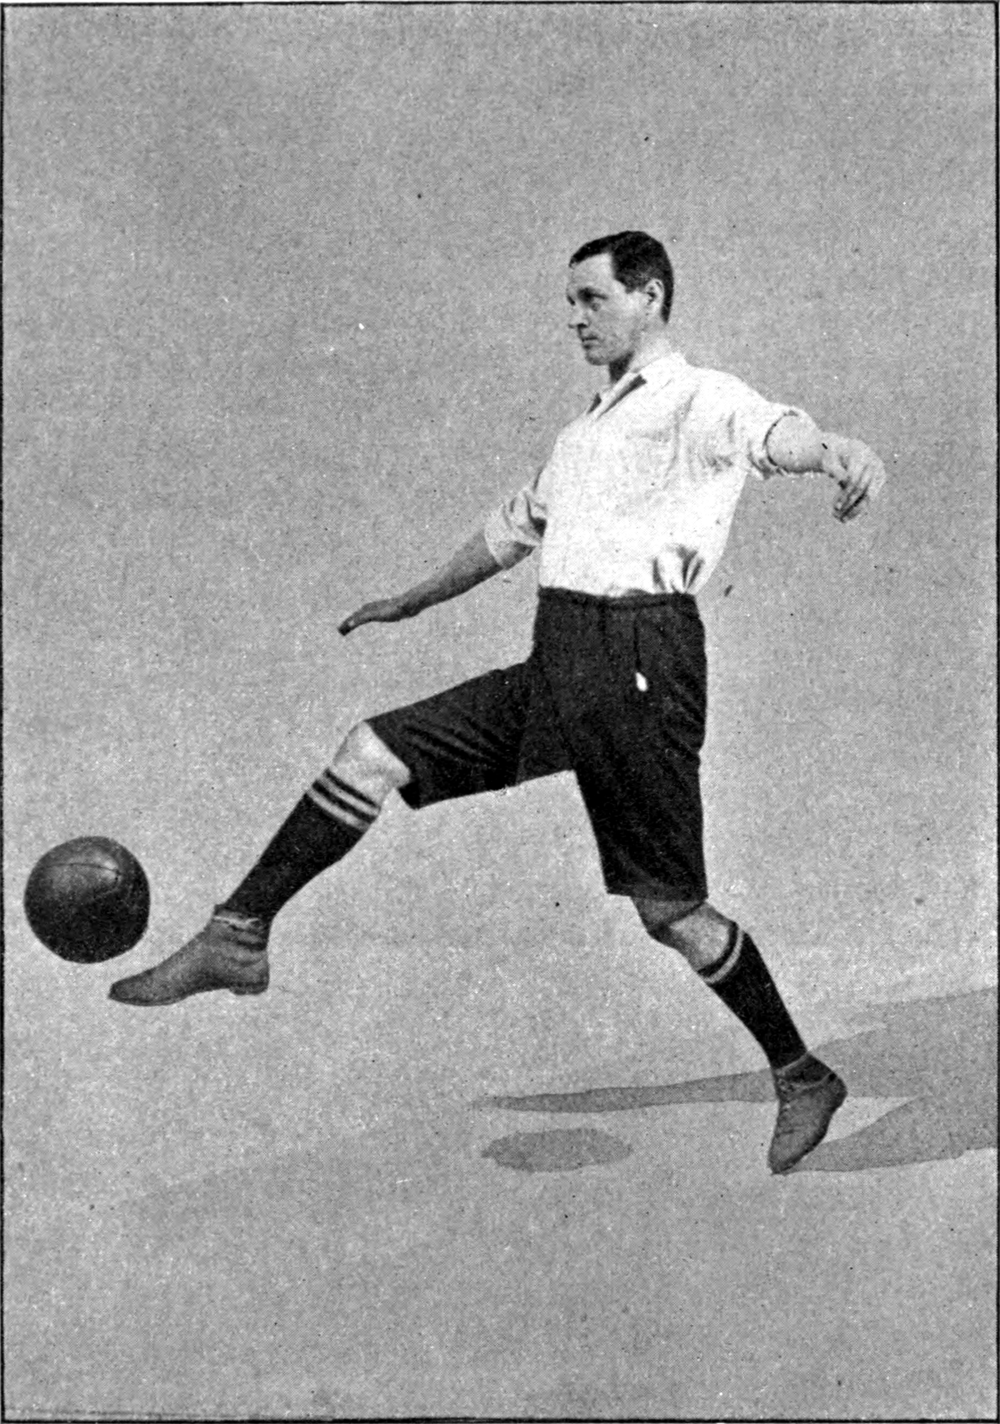 Illustration of a football player kicking a ball.